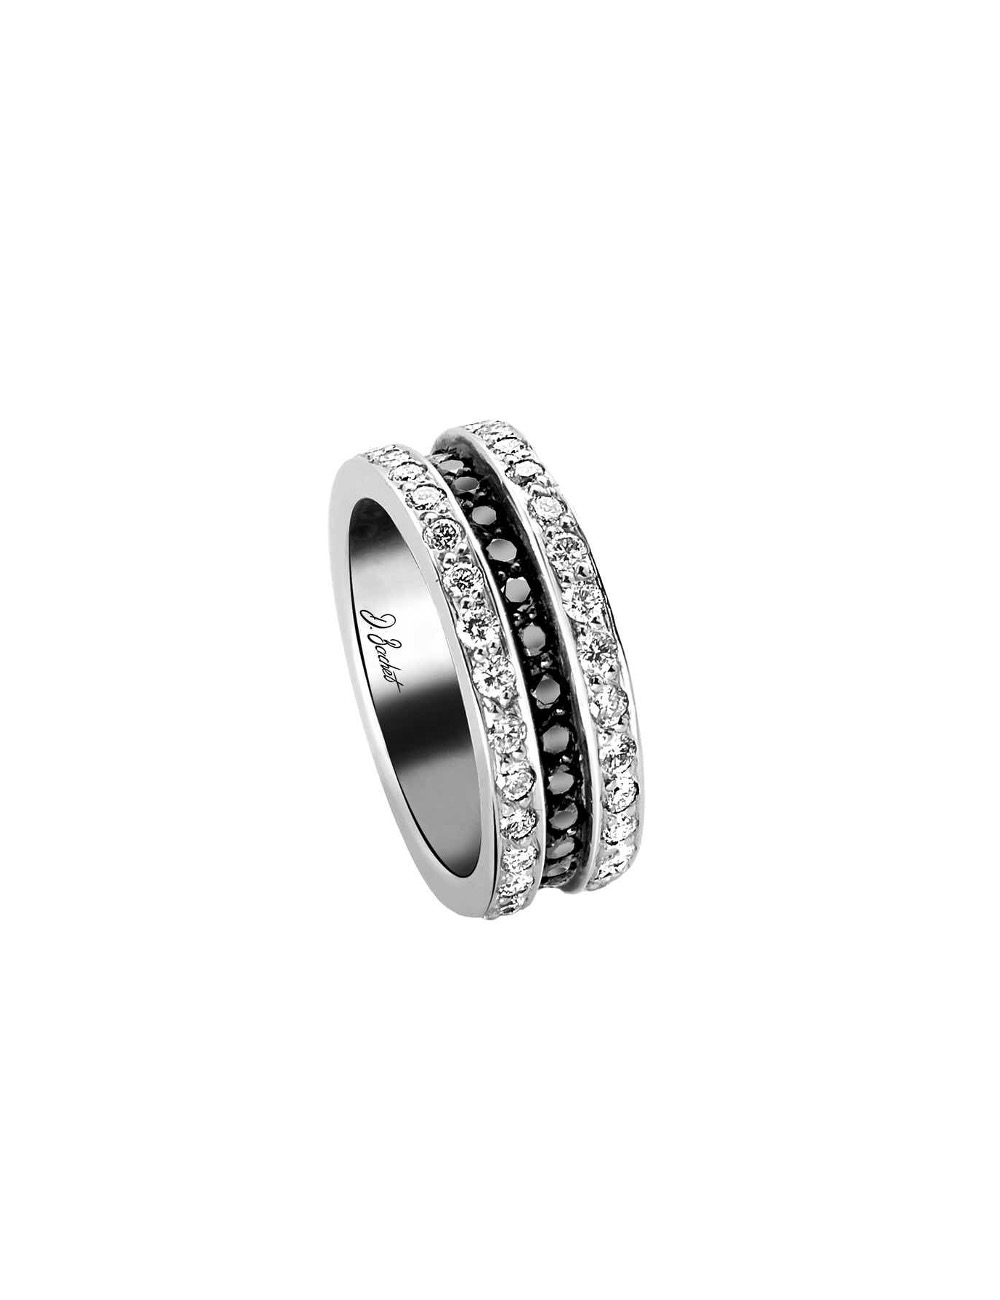 Unique eternity ring for women in platinum, white diamonds and black diamonds